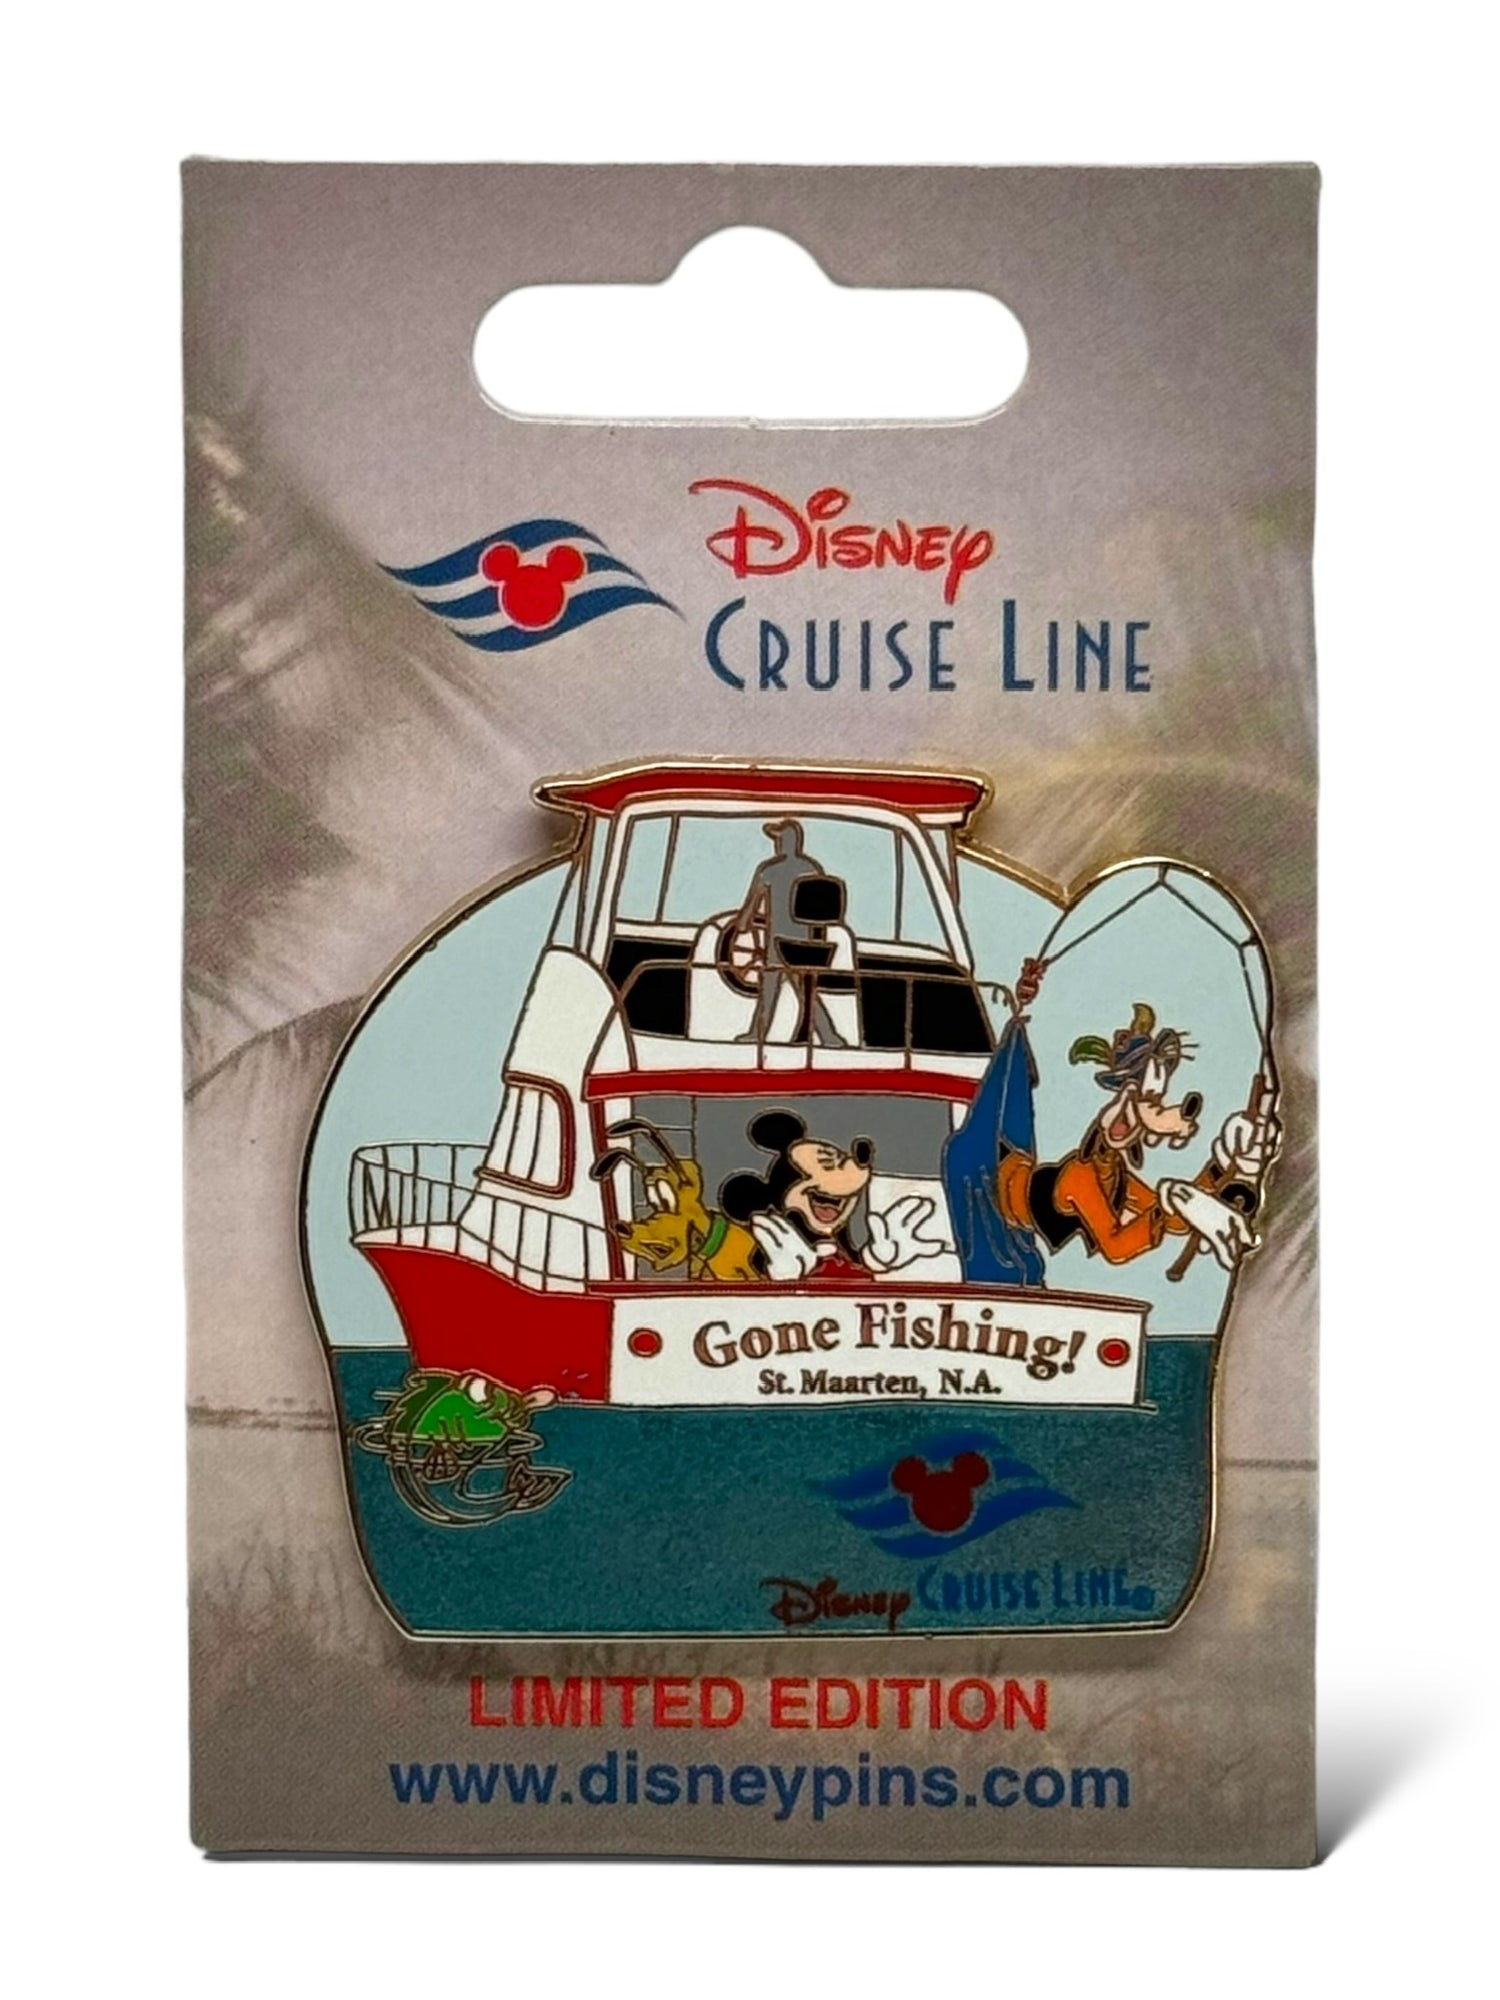 DCL - Disney Cruise Line